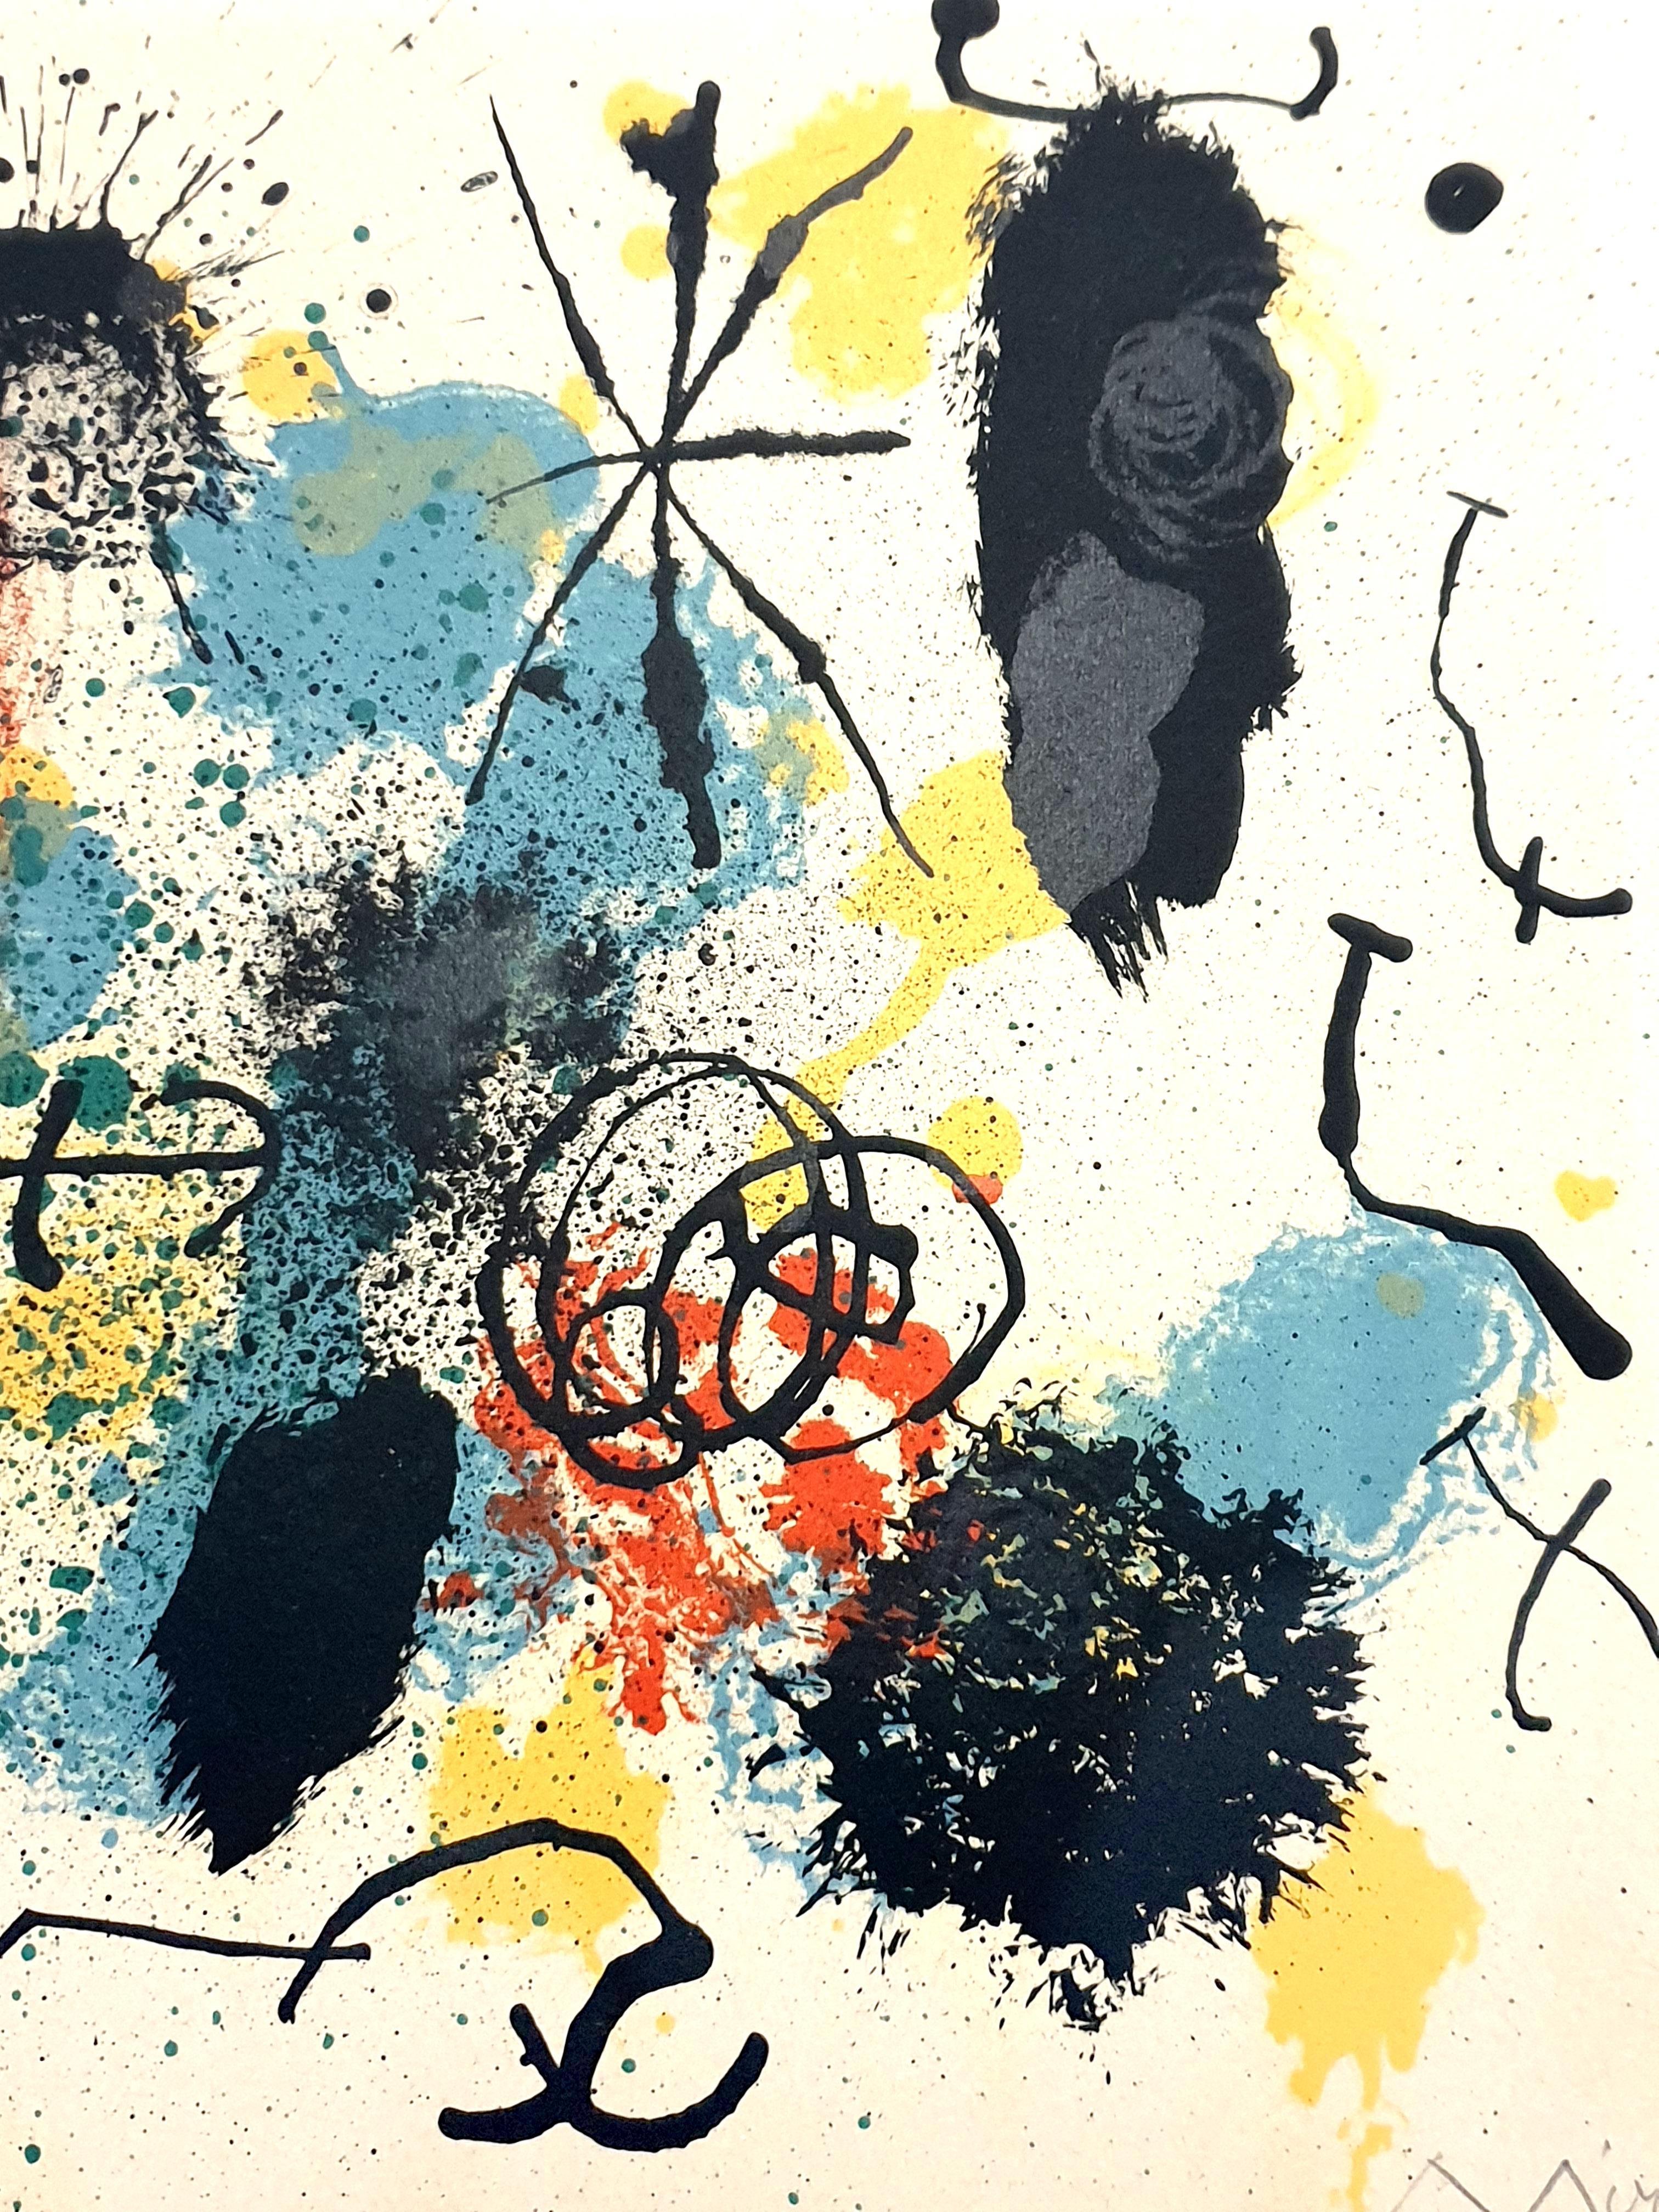 Joan Miro - I Work Like a Gardener - Original Handsigned Lithograph - Abstract Print by Joan Miró